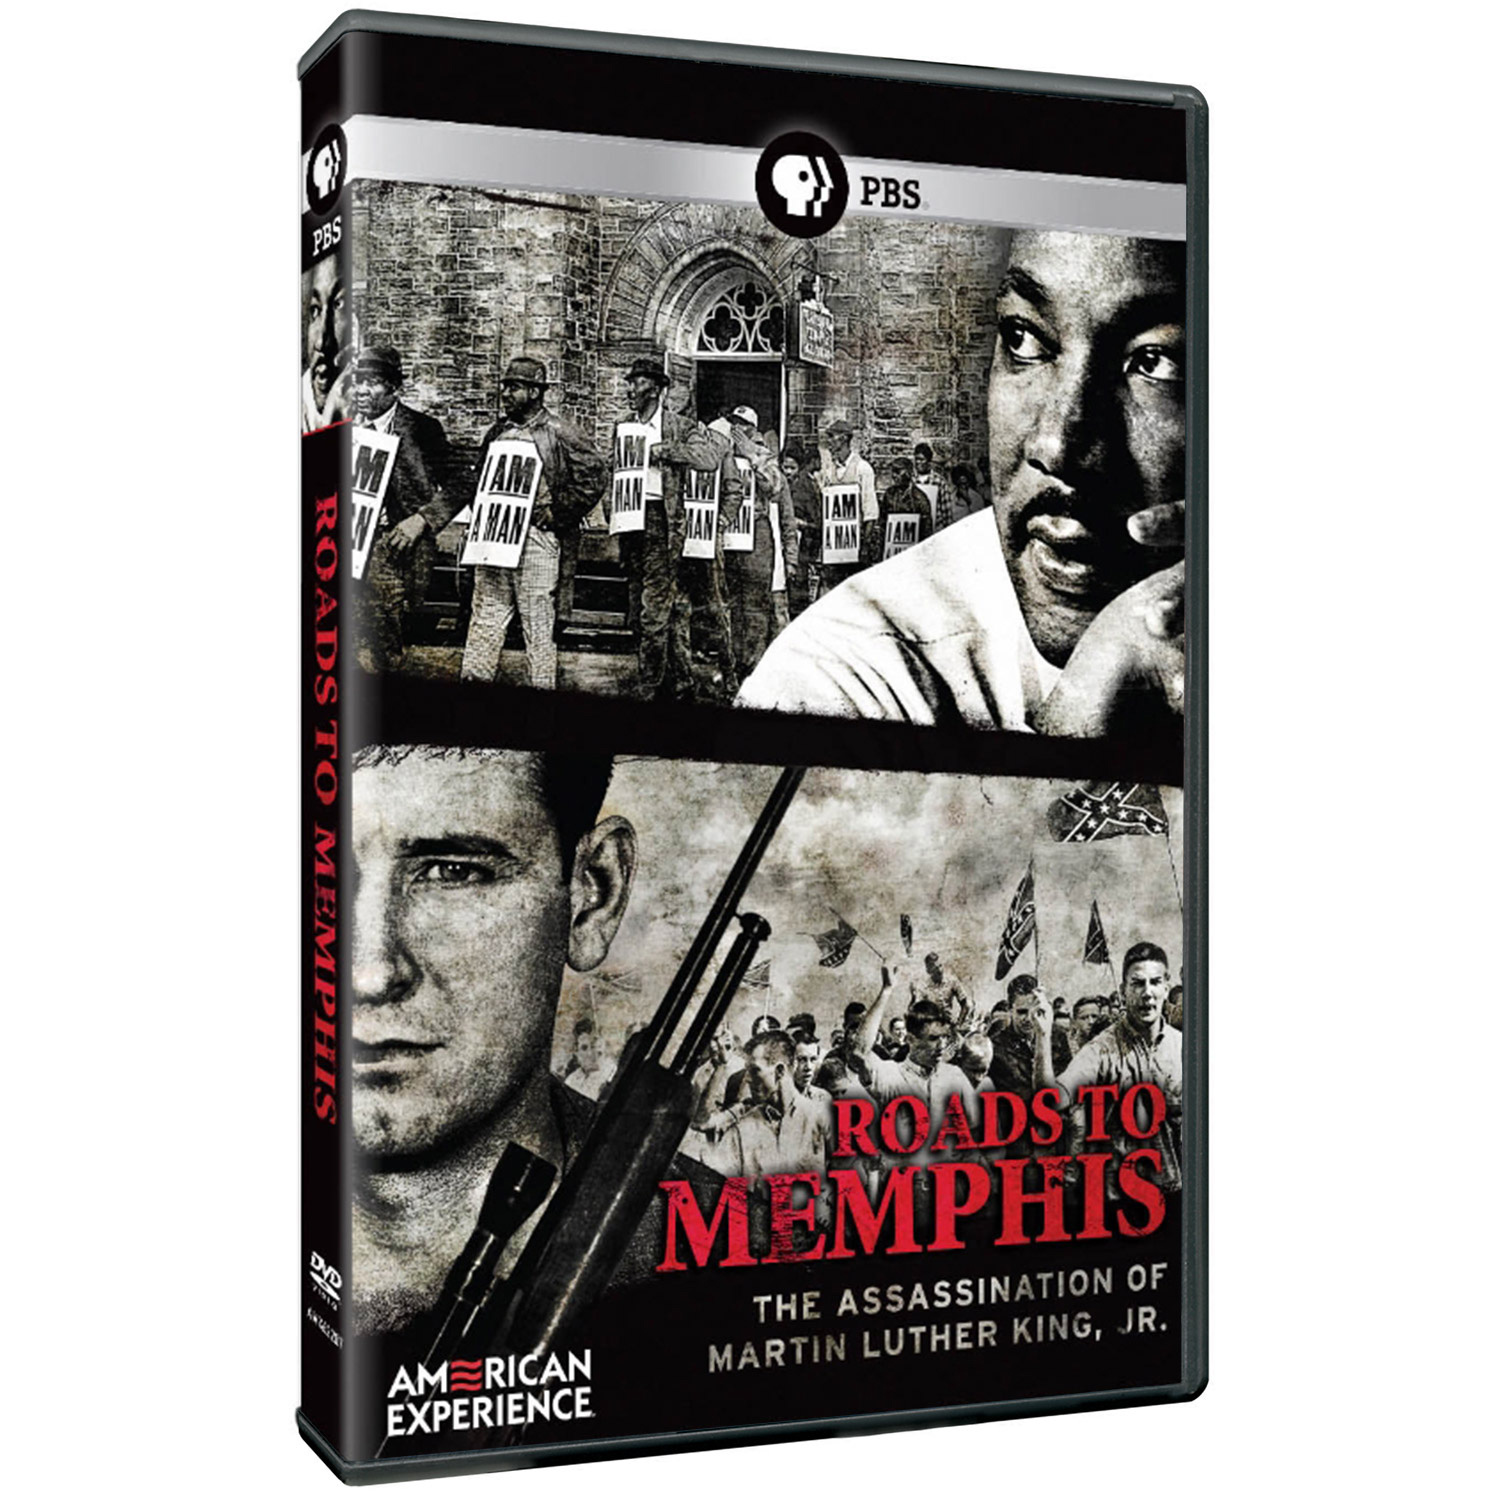 American Experience: Roads to Memphis DVD - AV Item